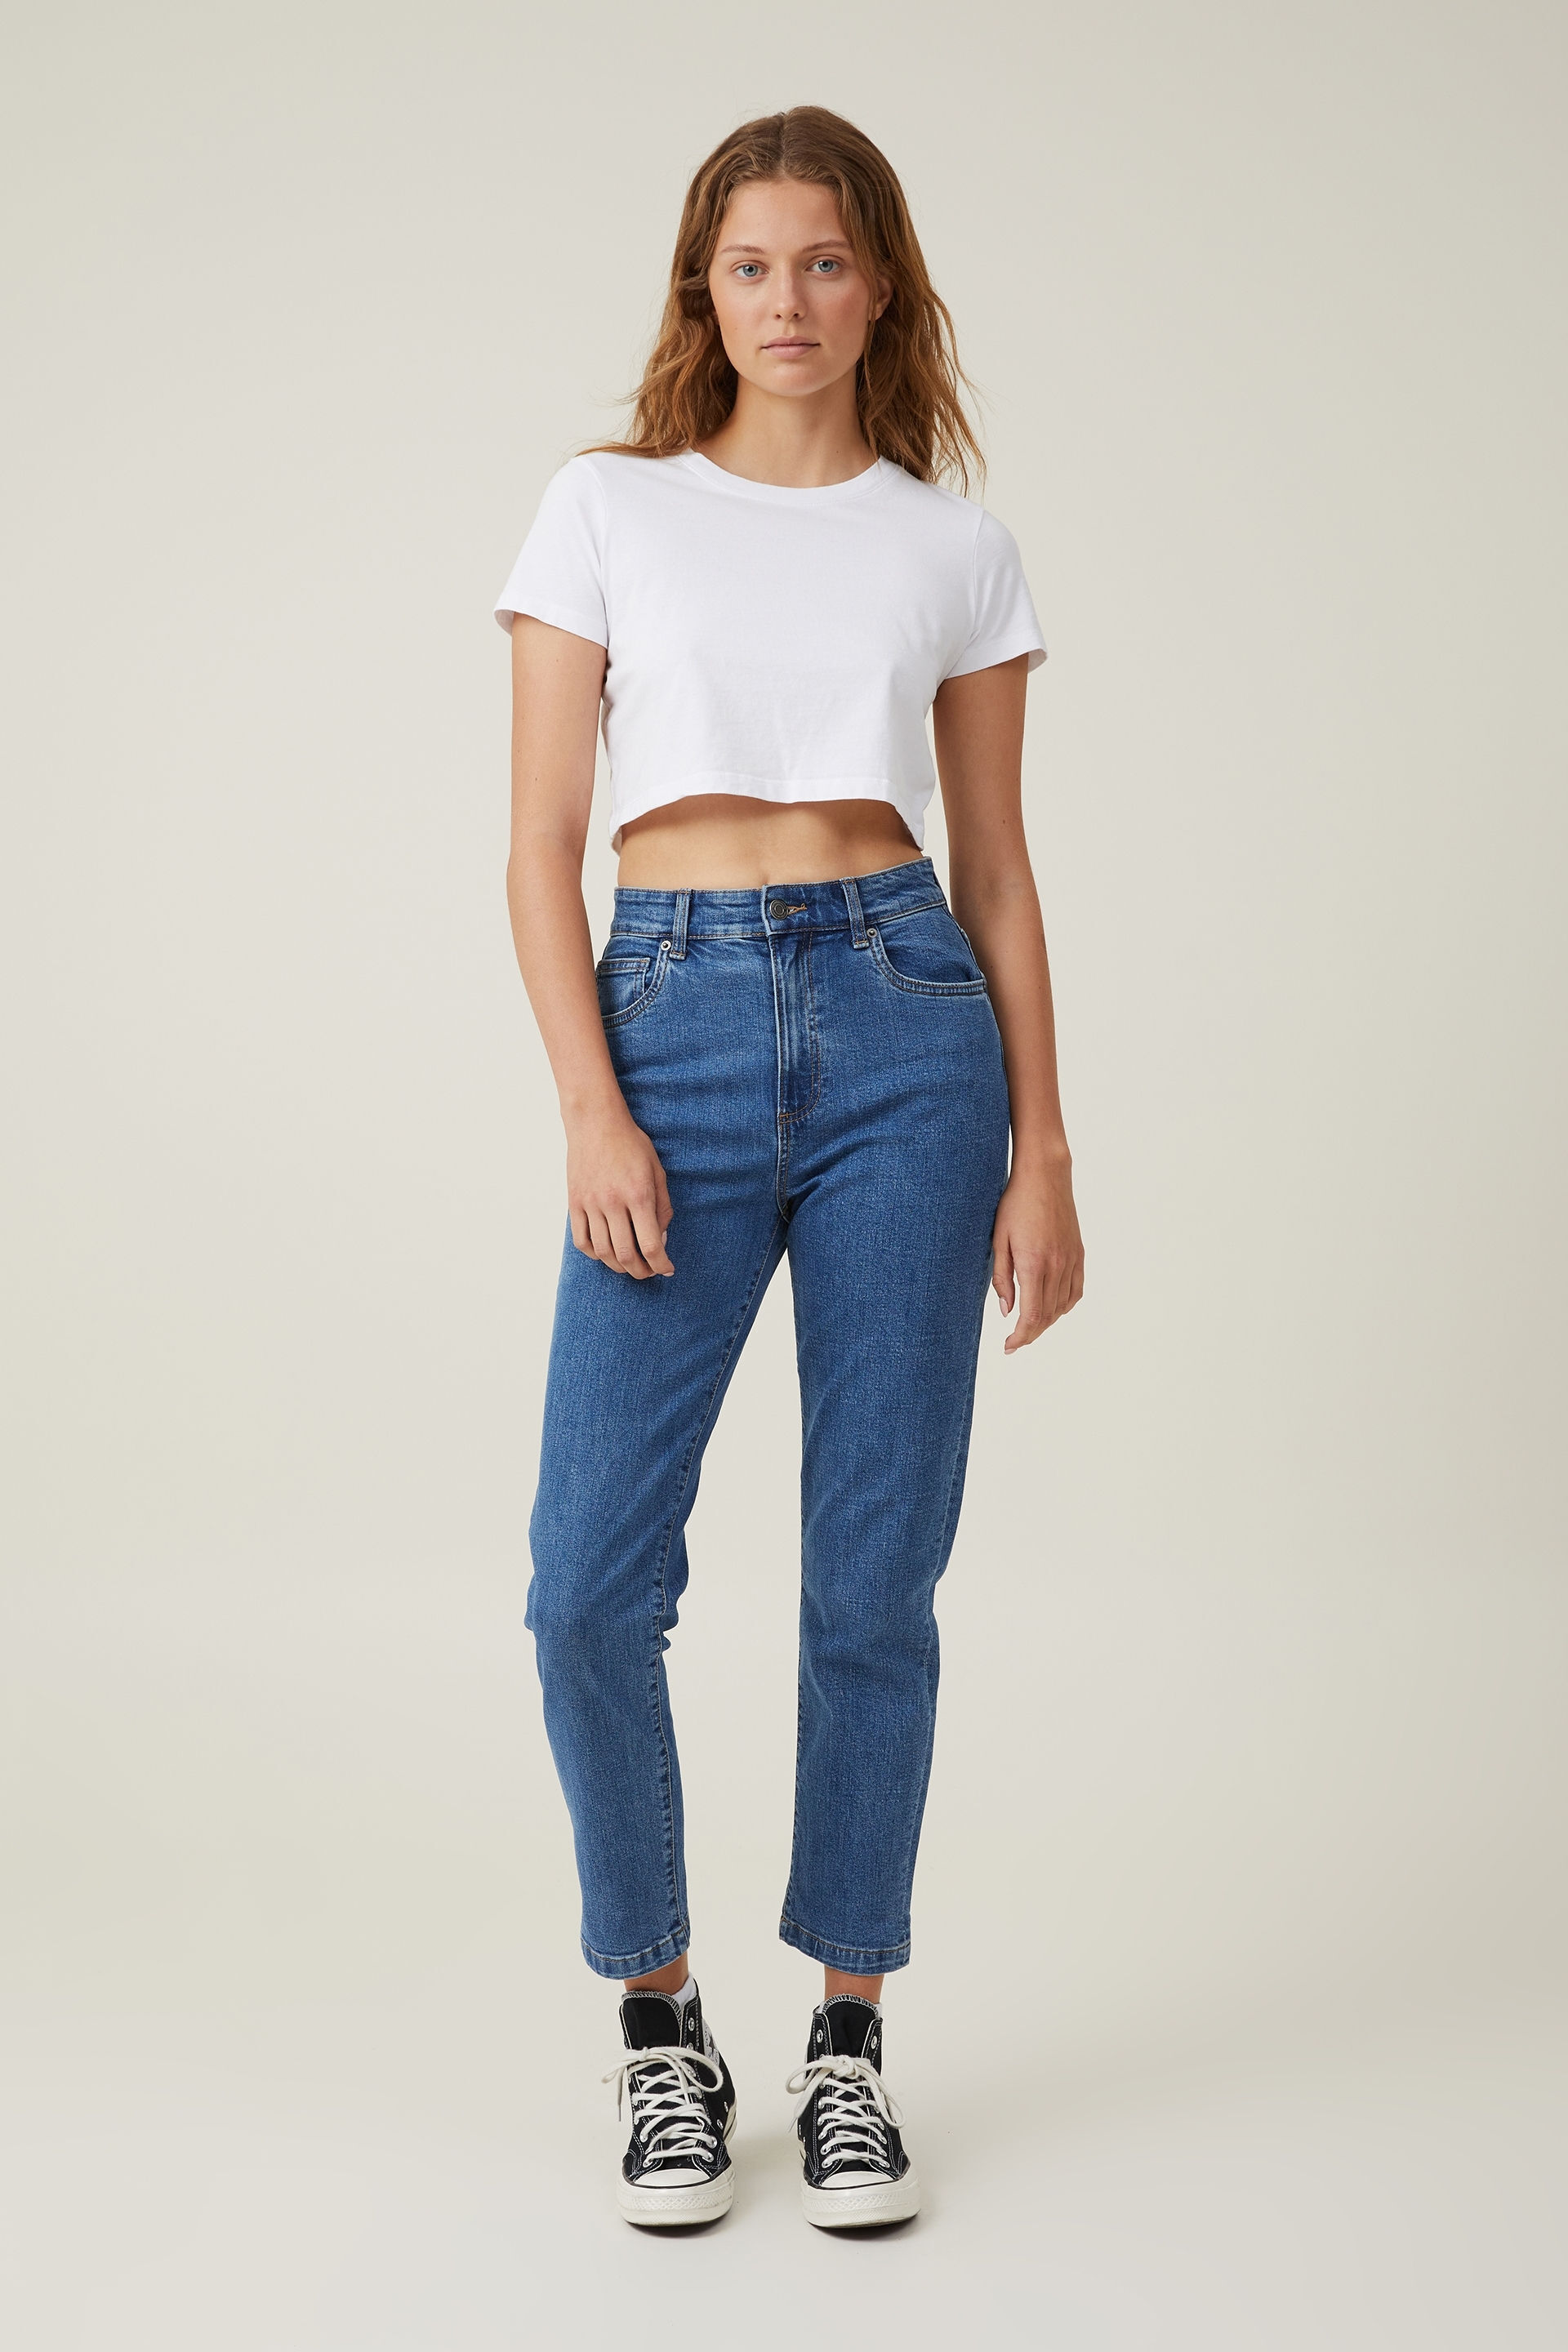 cotton on jeans price